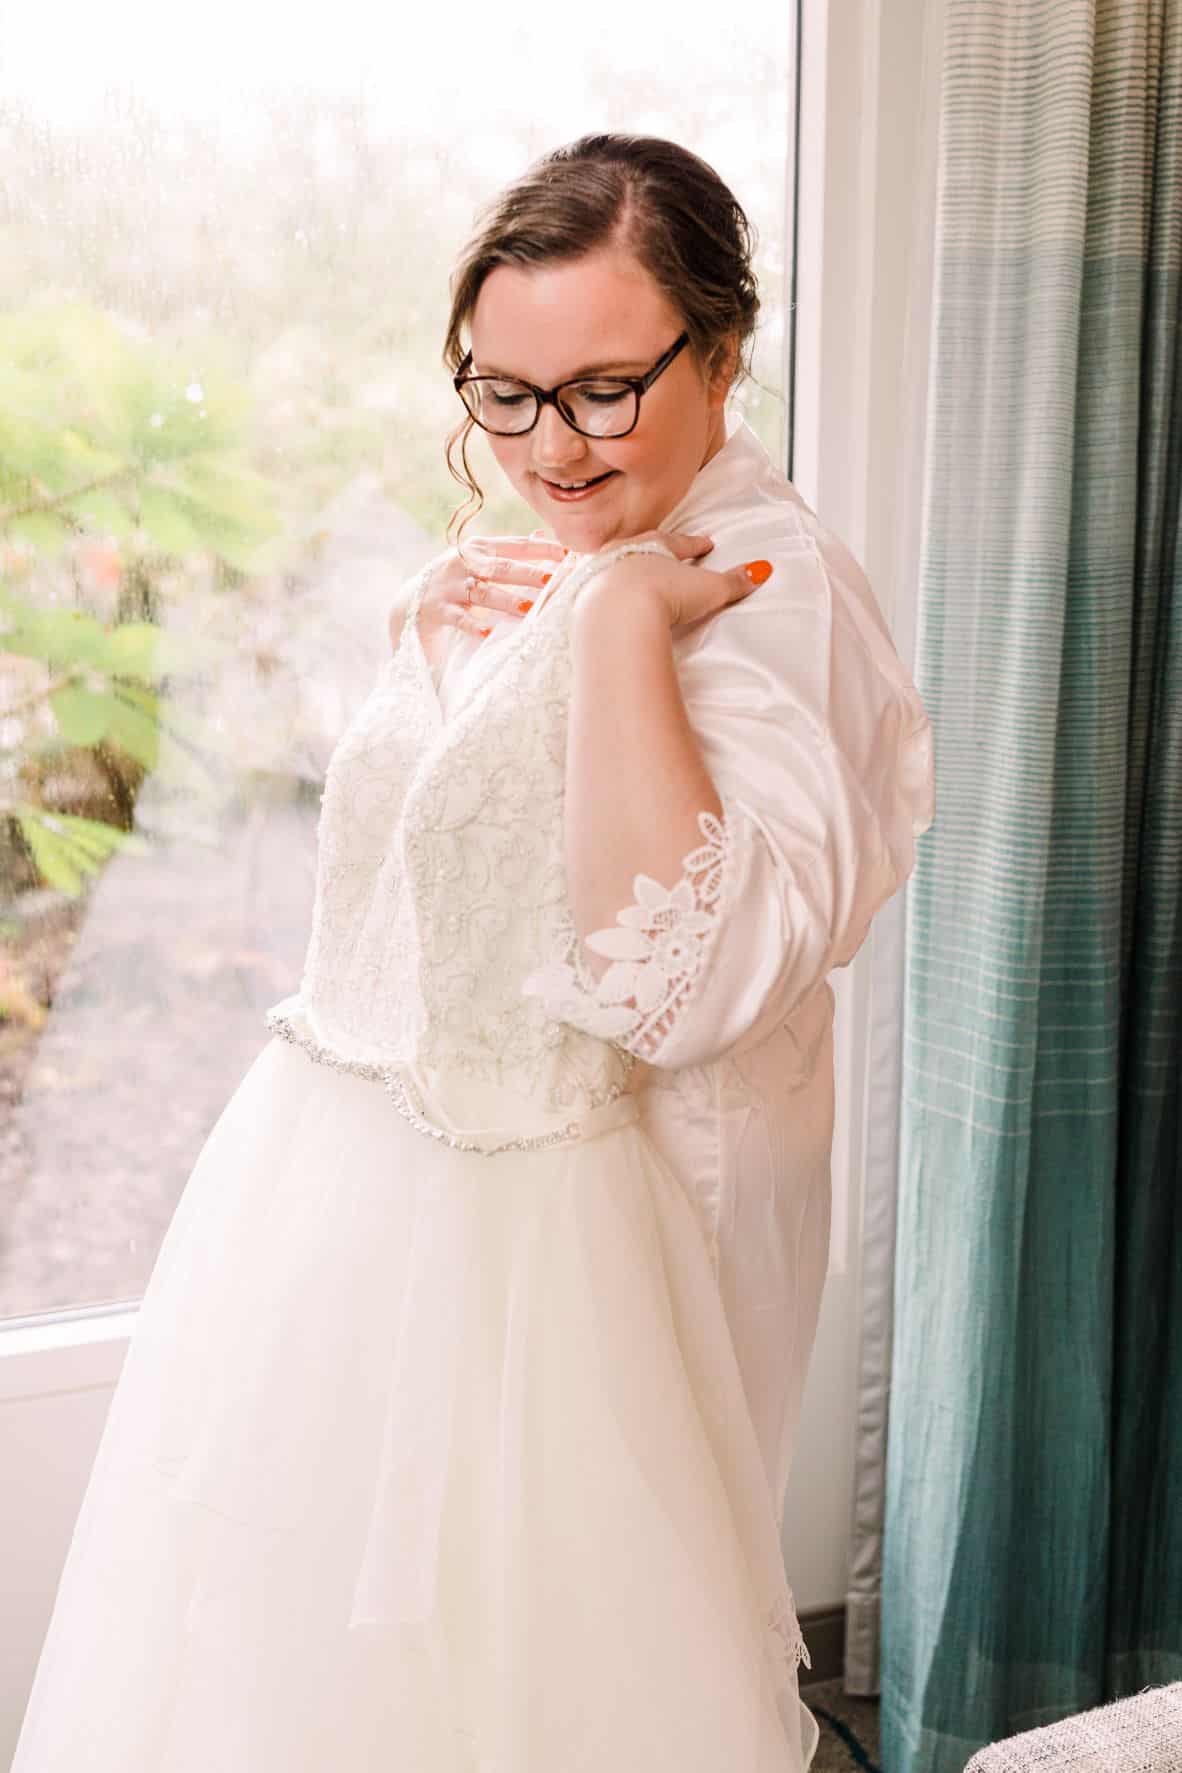 Universal Orlando Wedding - Just Marry Weddings - Anna So Photography - Getting Ready